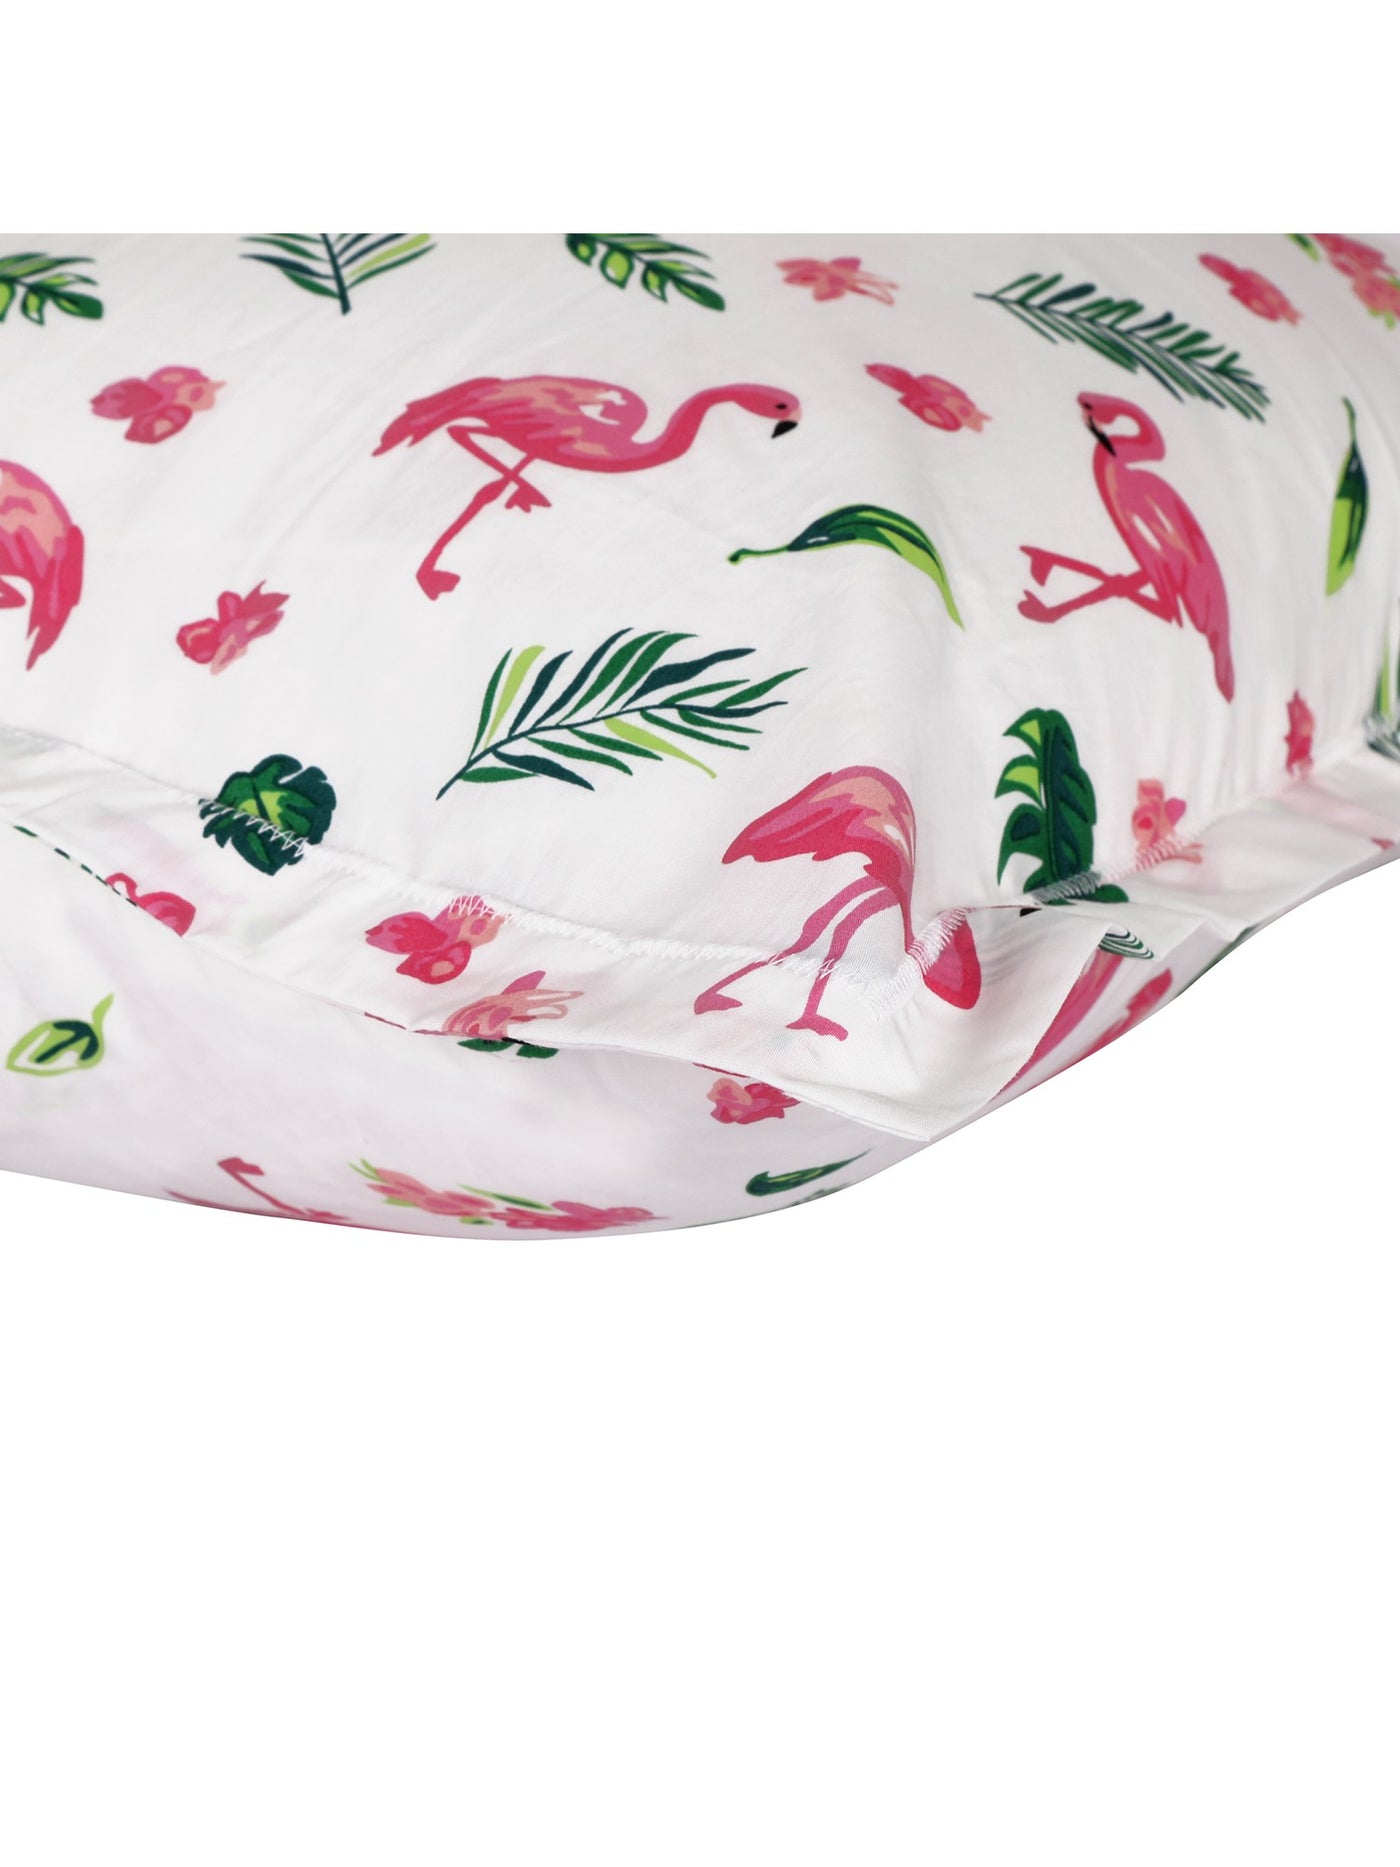 Flamingos Bedsheet